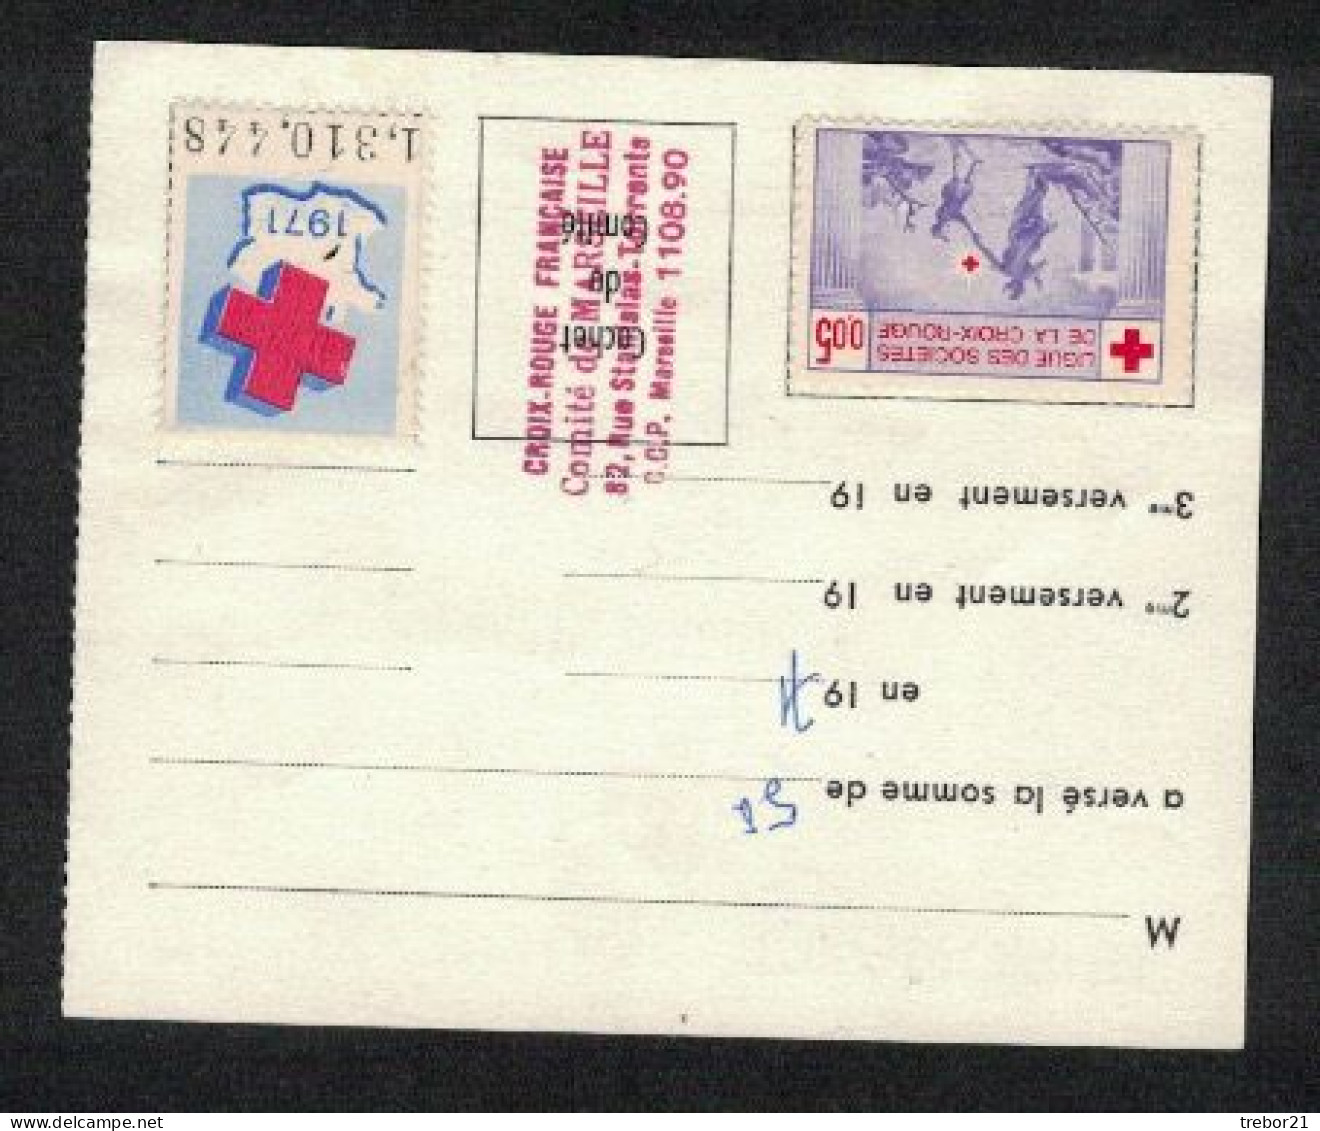 Carte Adhérent Croix Rouge 1971 - Red Cross